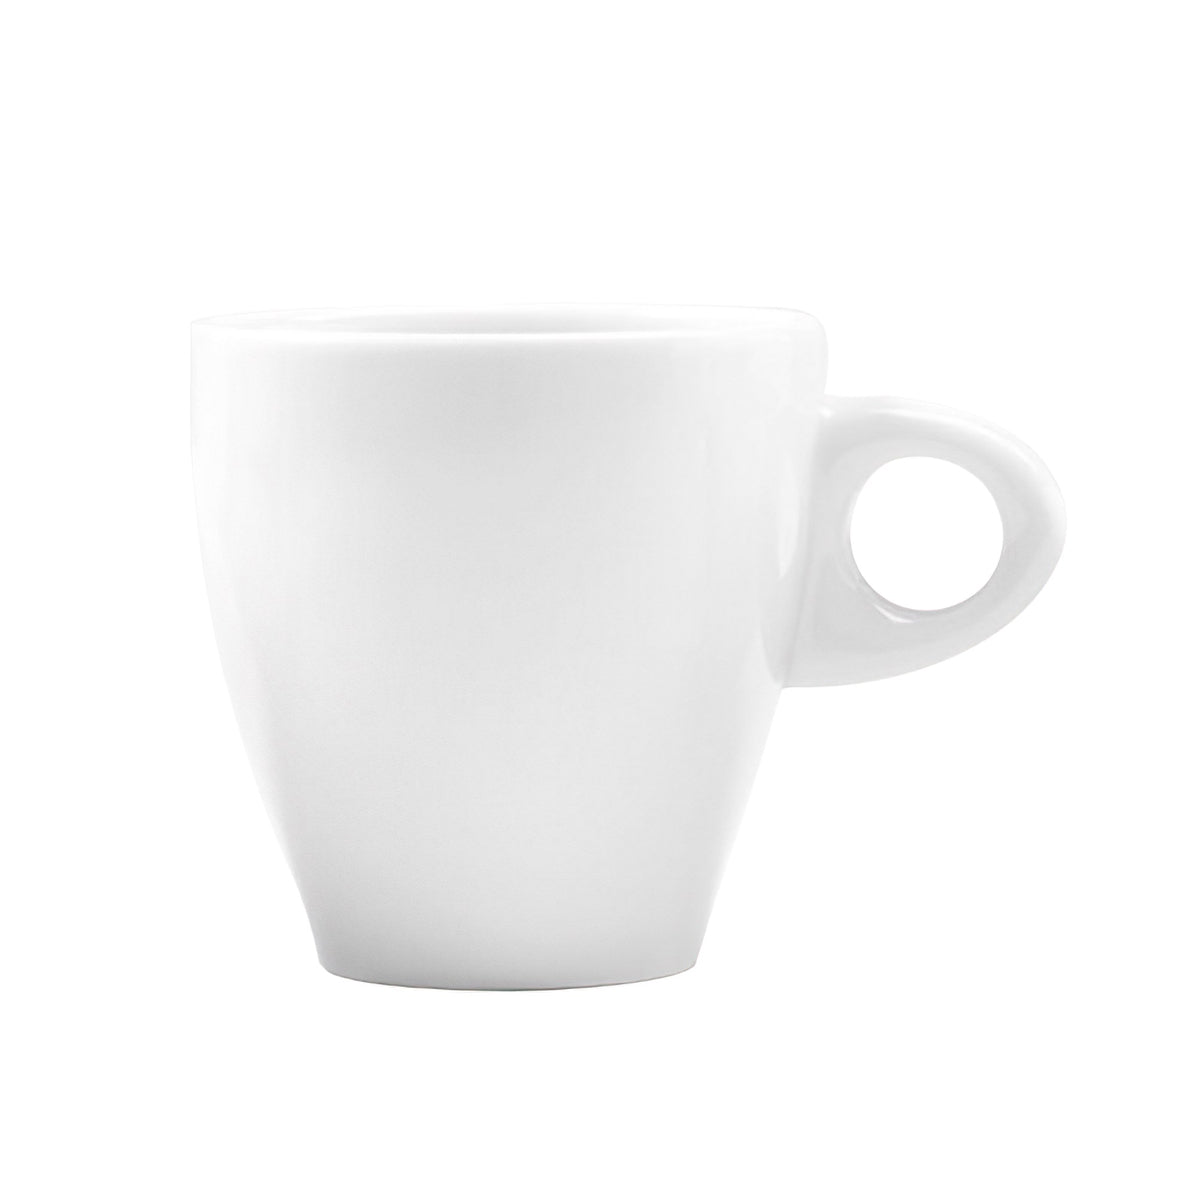 (6 Stykker) Seltmann Weiden - Melk Kaffekanne - 0,38 Liter